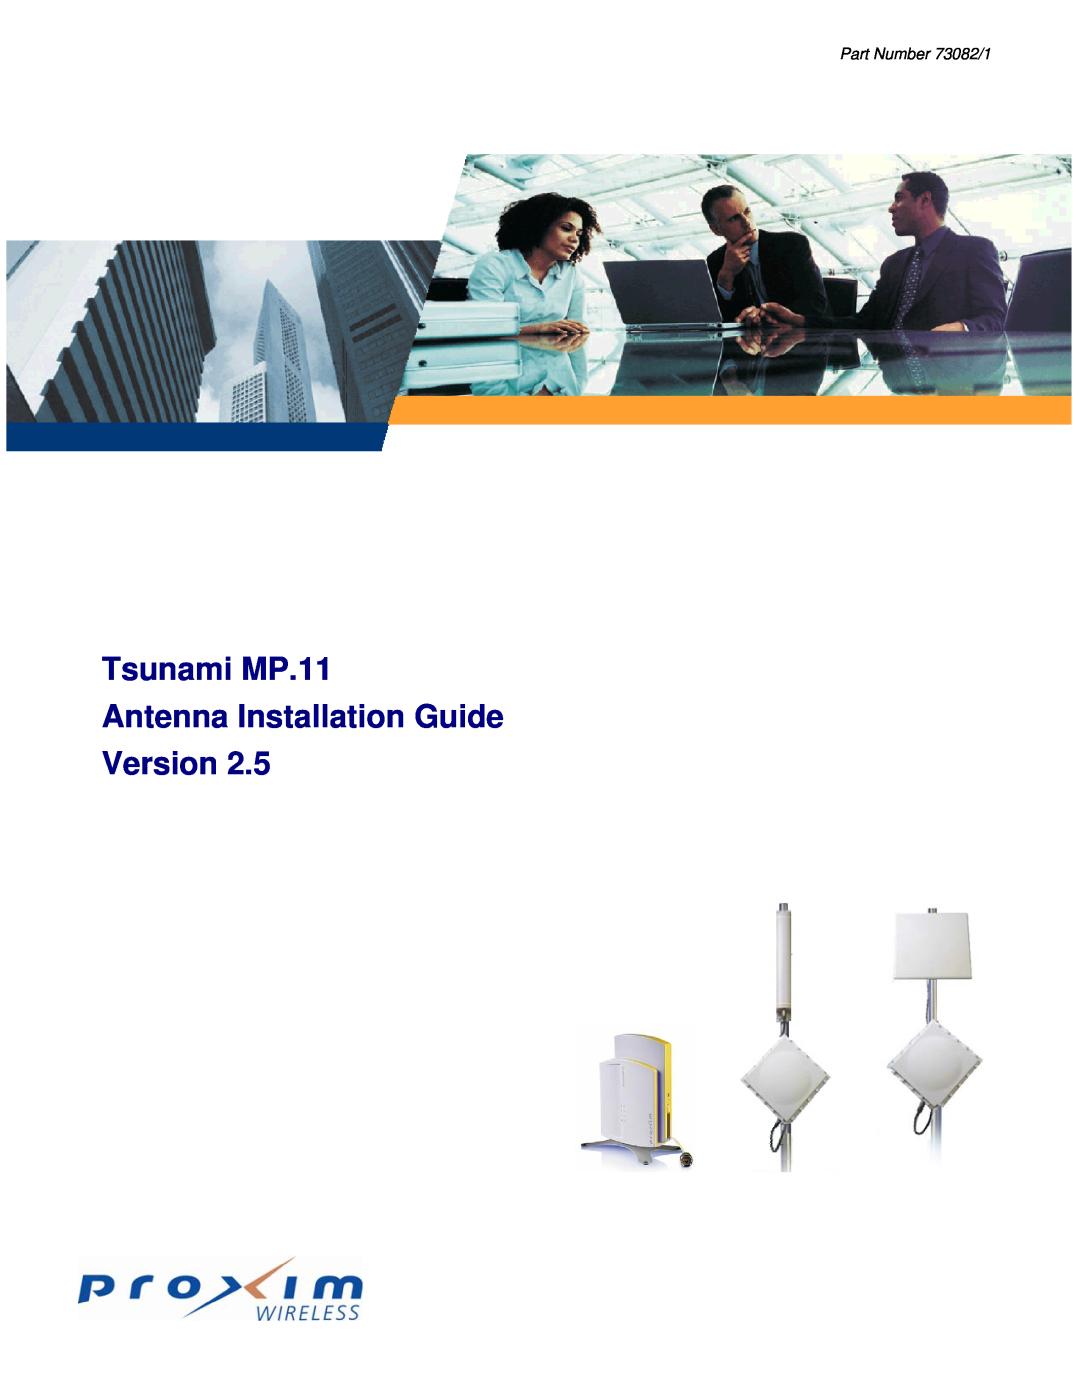 Proxim manual Tsunami MP.11 Antenna Installation Guide Version, Part Number 73082/1 